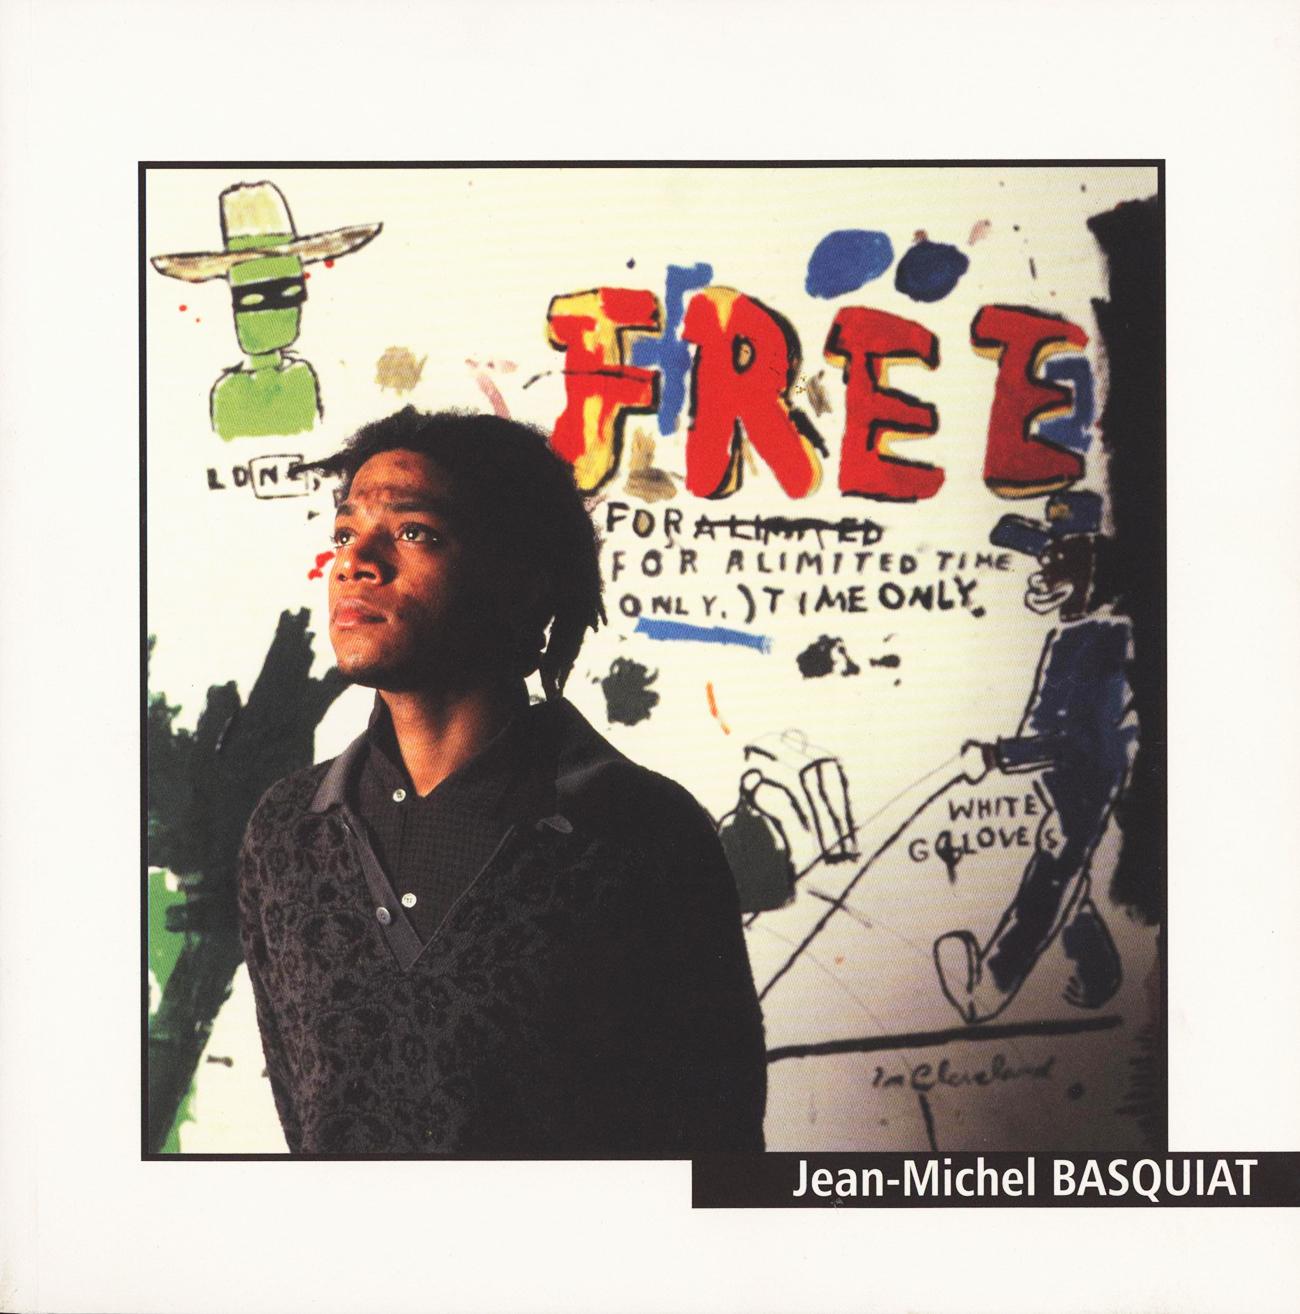 Basquiat: The Transcendental Voyage, at L'Espal, Catalog Le Mans, France, 1999 - Art by after Jean-Michel Basquiat